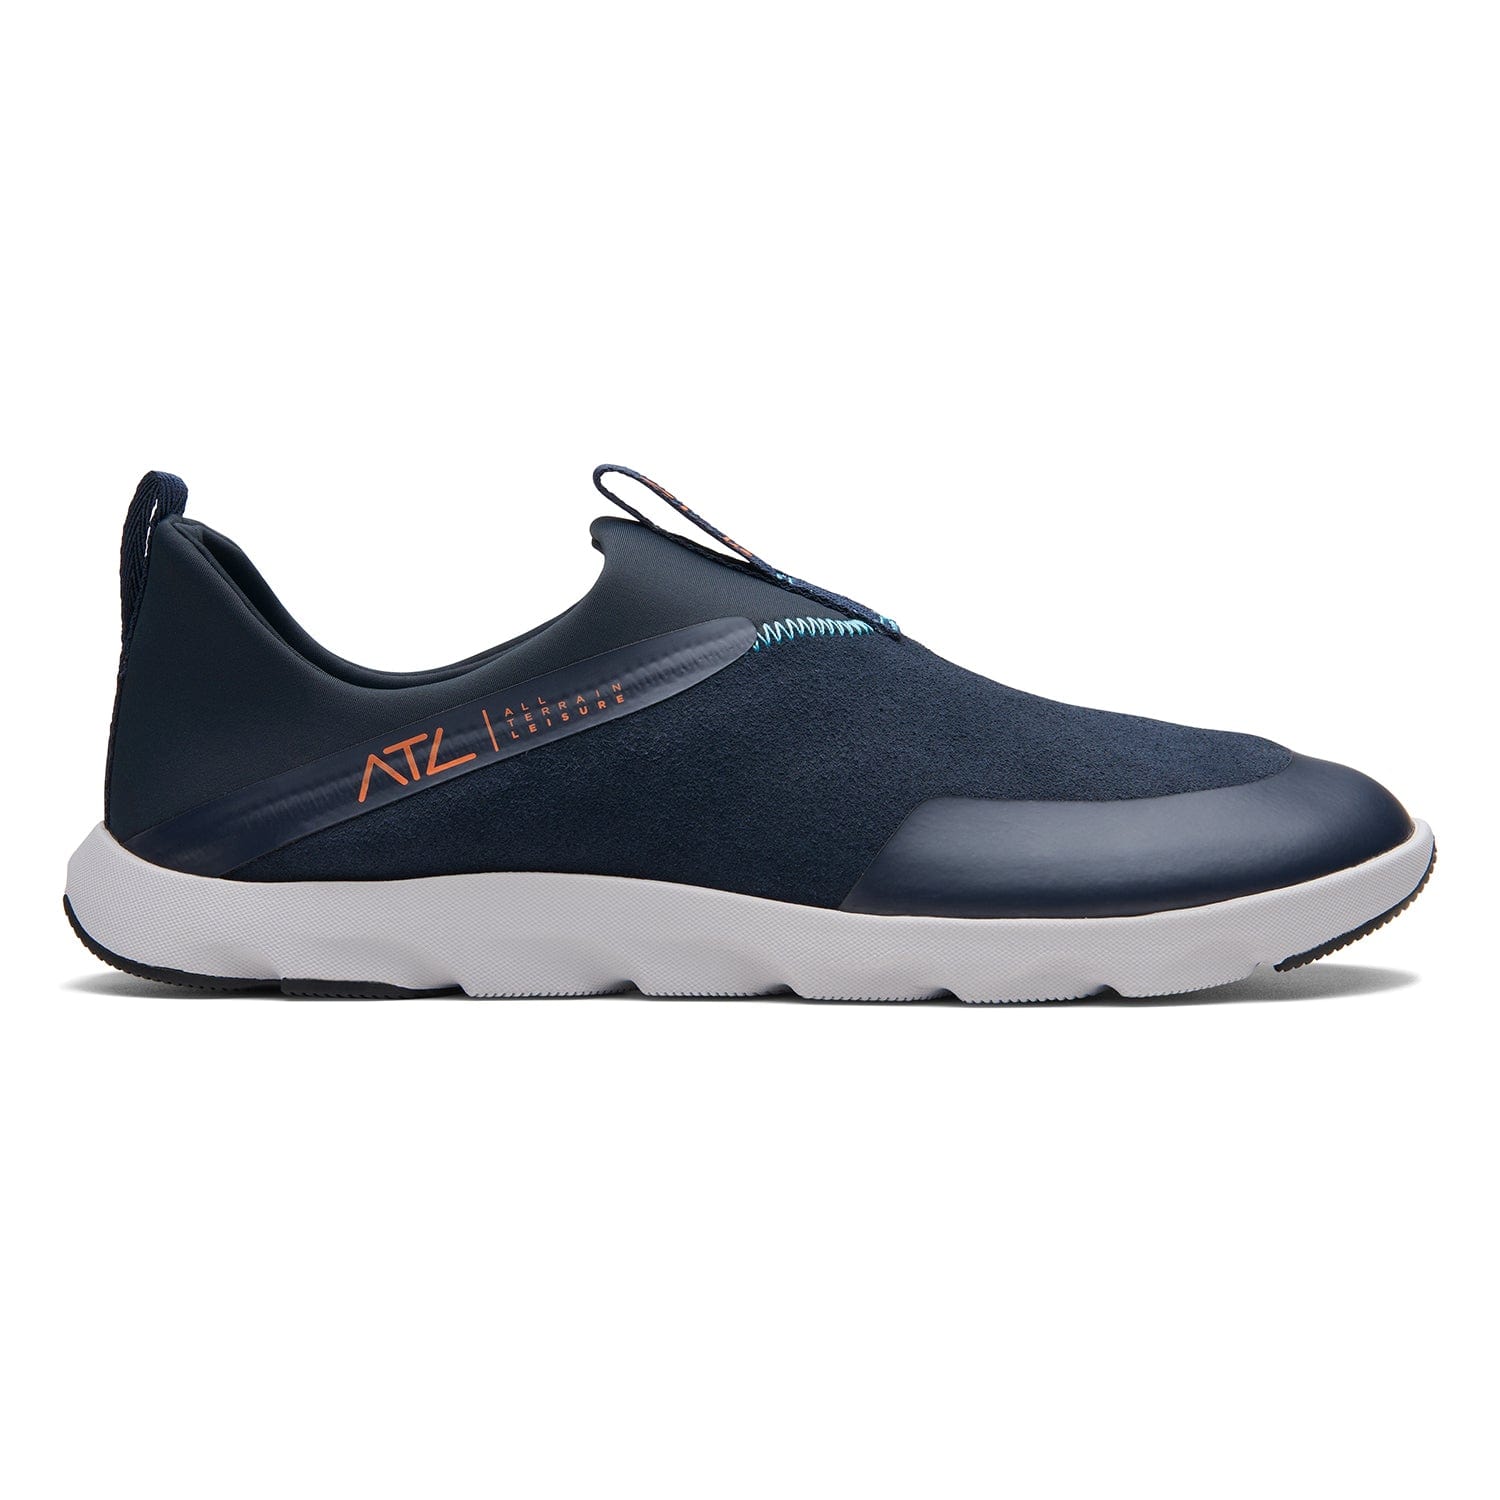 Clarks ATL Coast Moc Shoes - Navy - 261705537 G Width (Standard Fit)